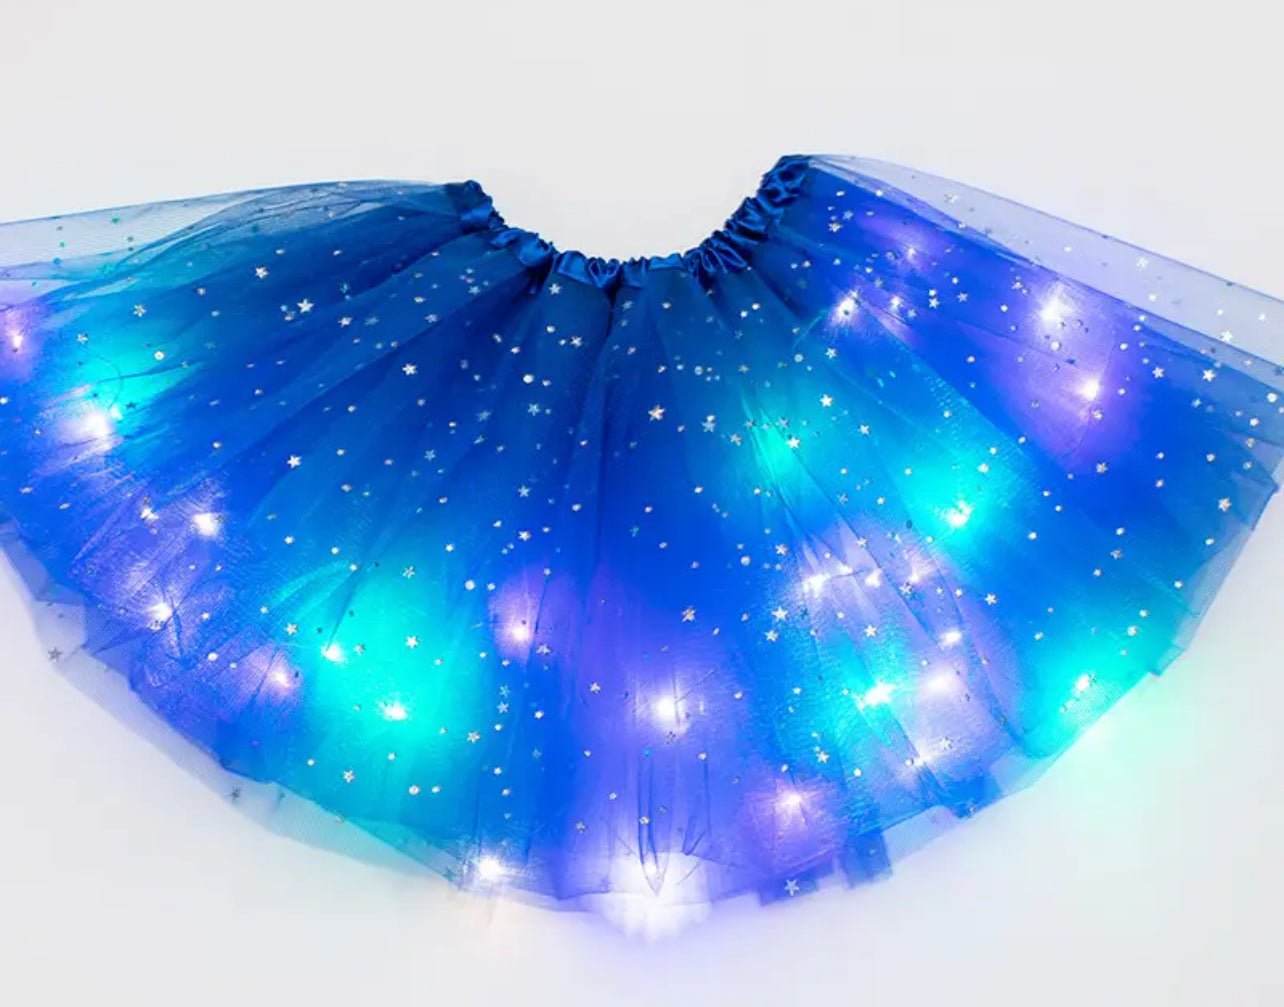 LED Glowing Light Princess Tutu Skirts, Children/Adult